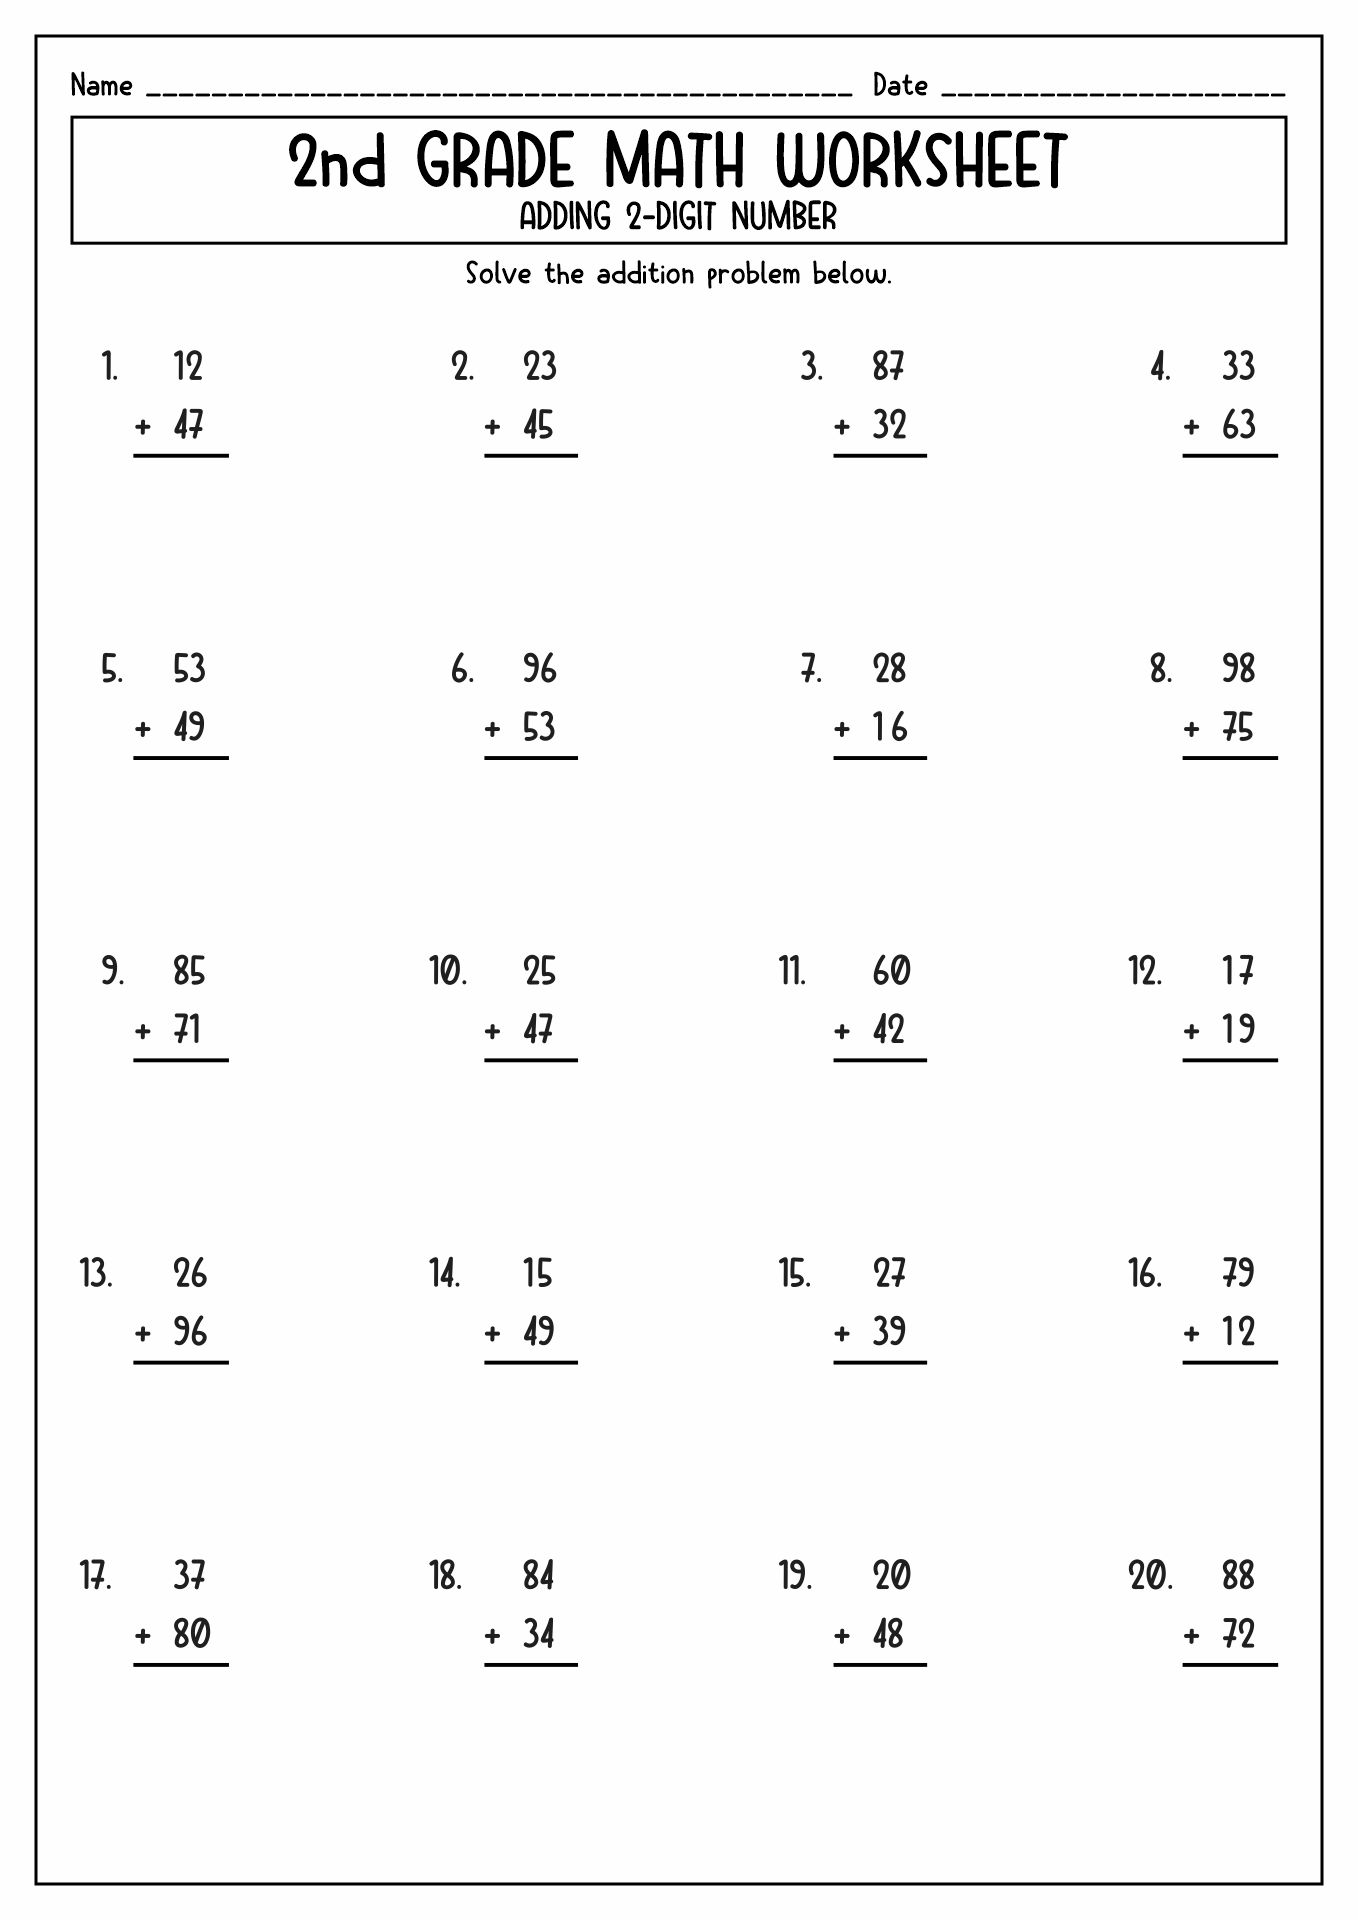 Second Grade Math Worksheets Image